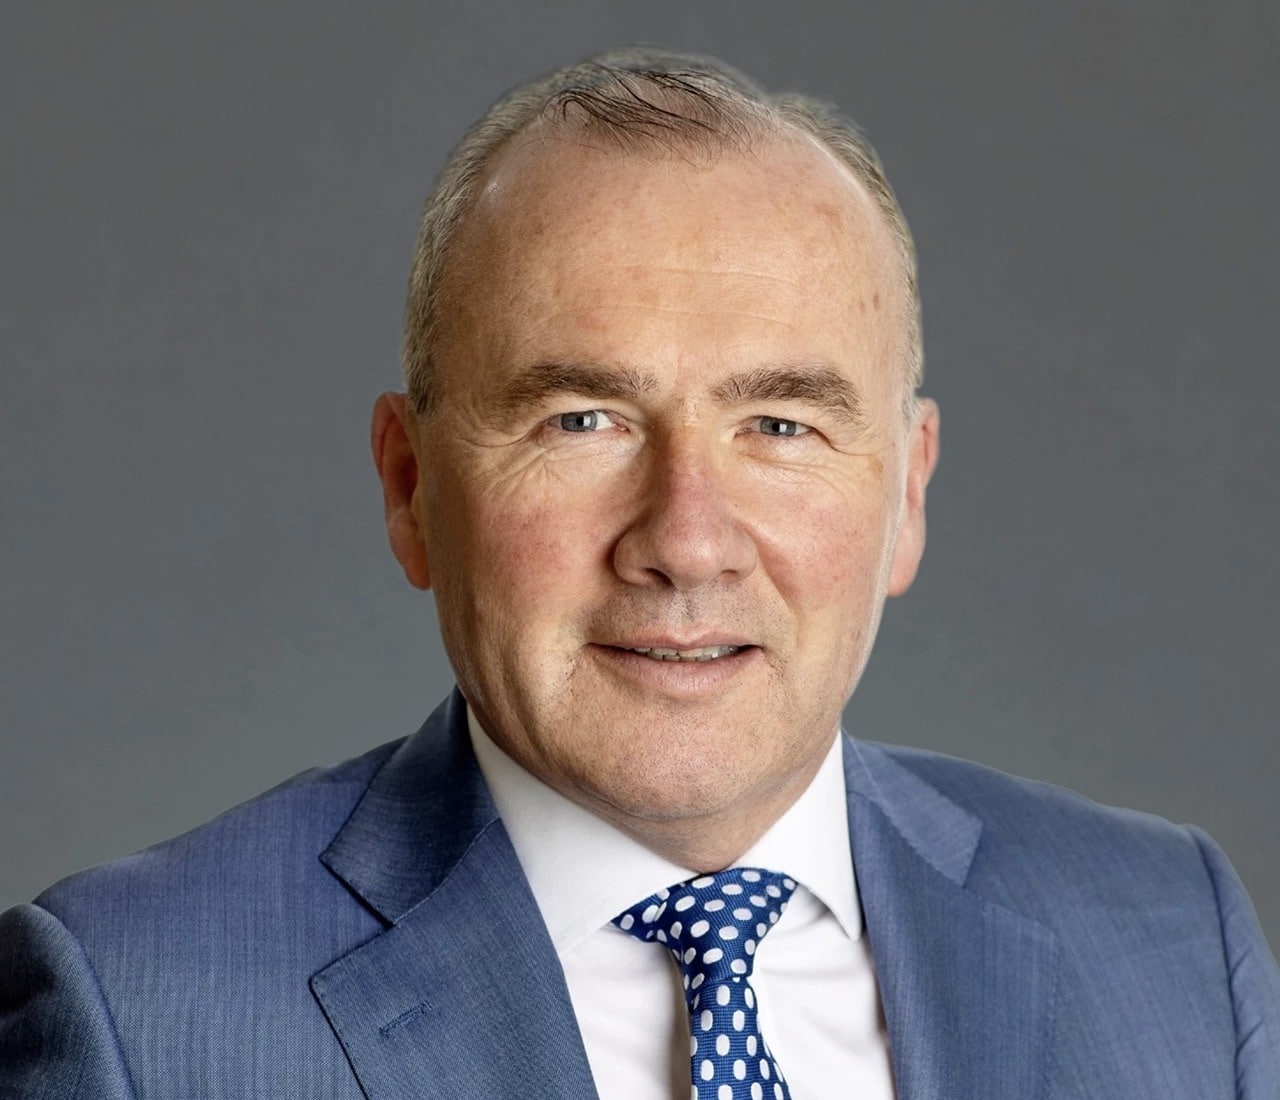 Ardonagh Europe CEO Conor Brennan